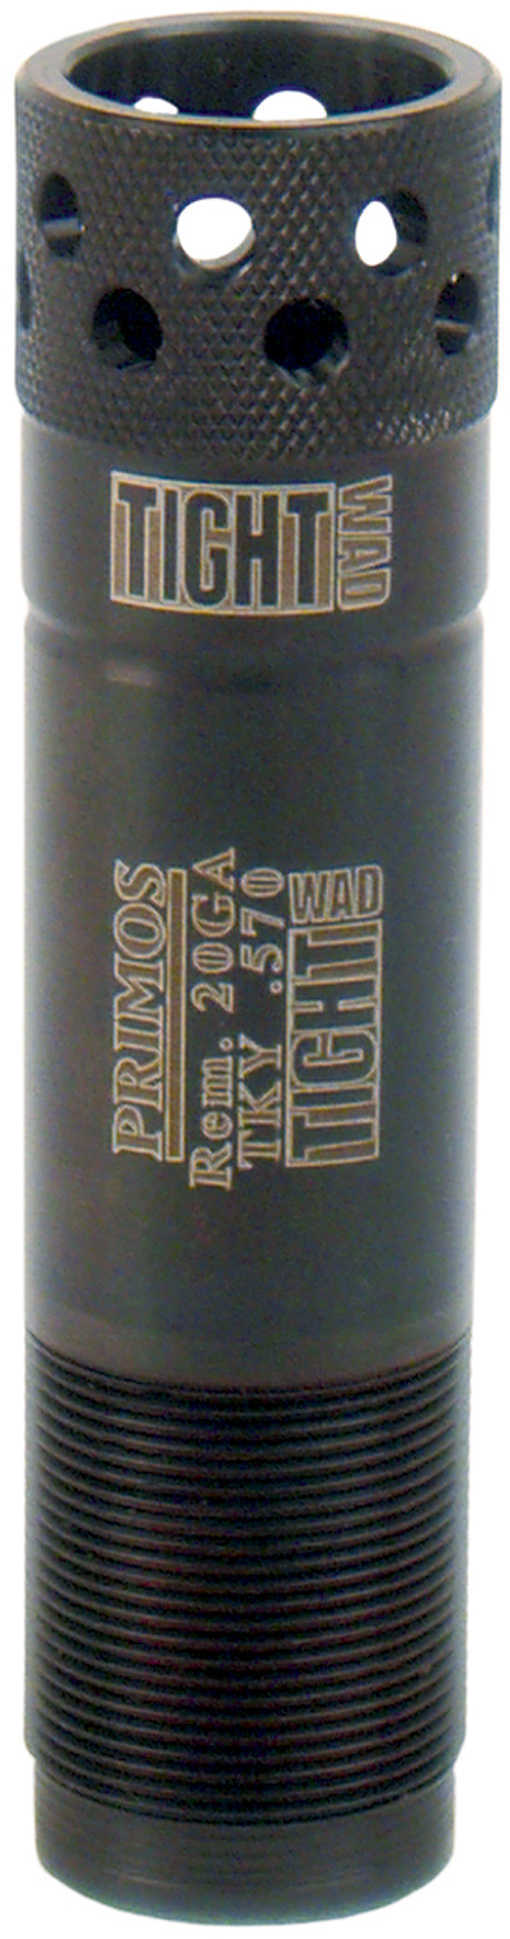 Primos Tight-Wad Choke Tube Remington 20Ga